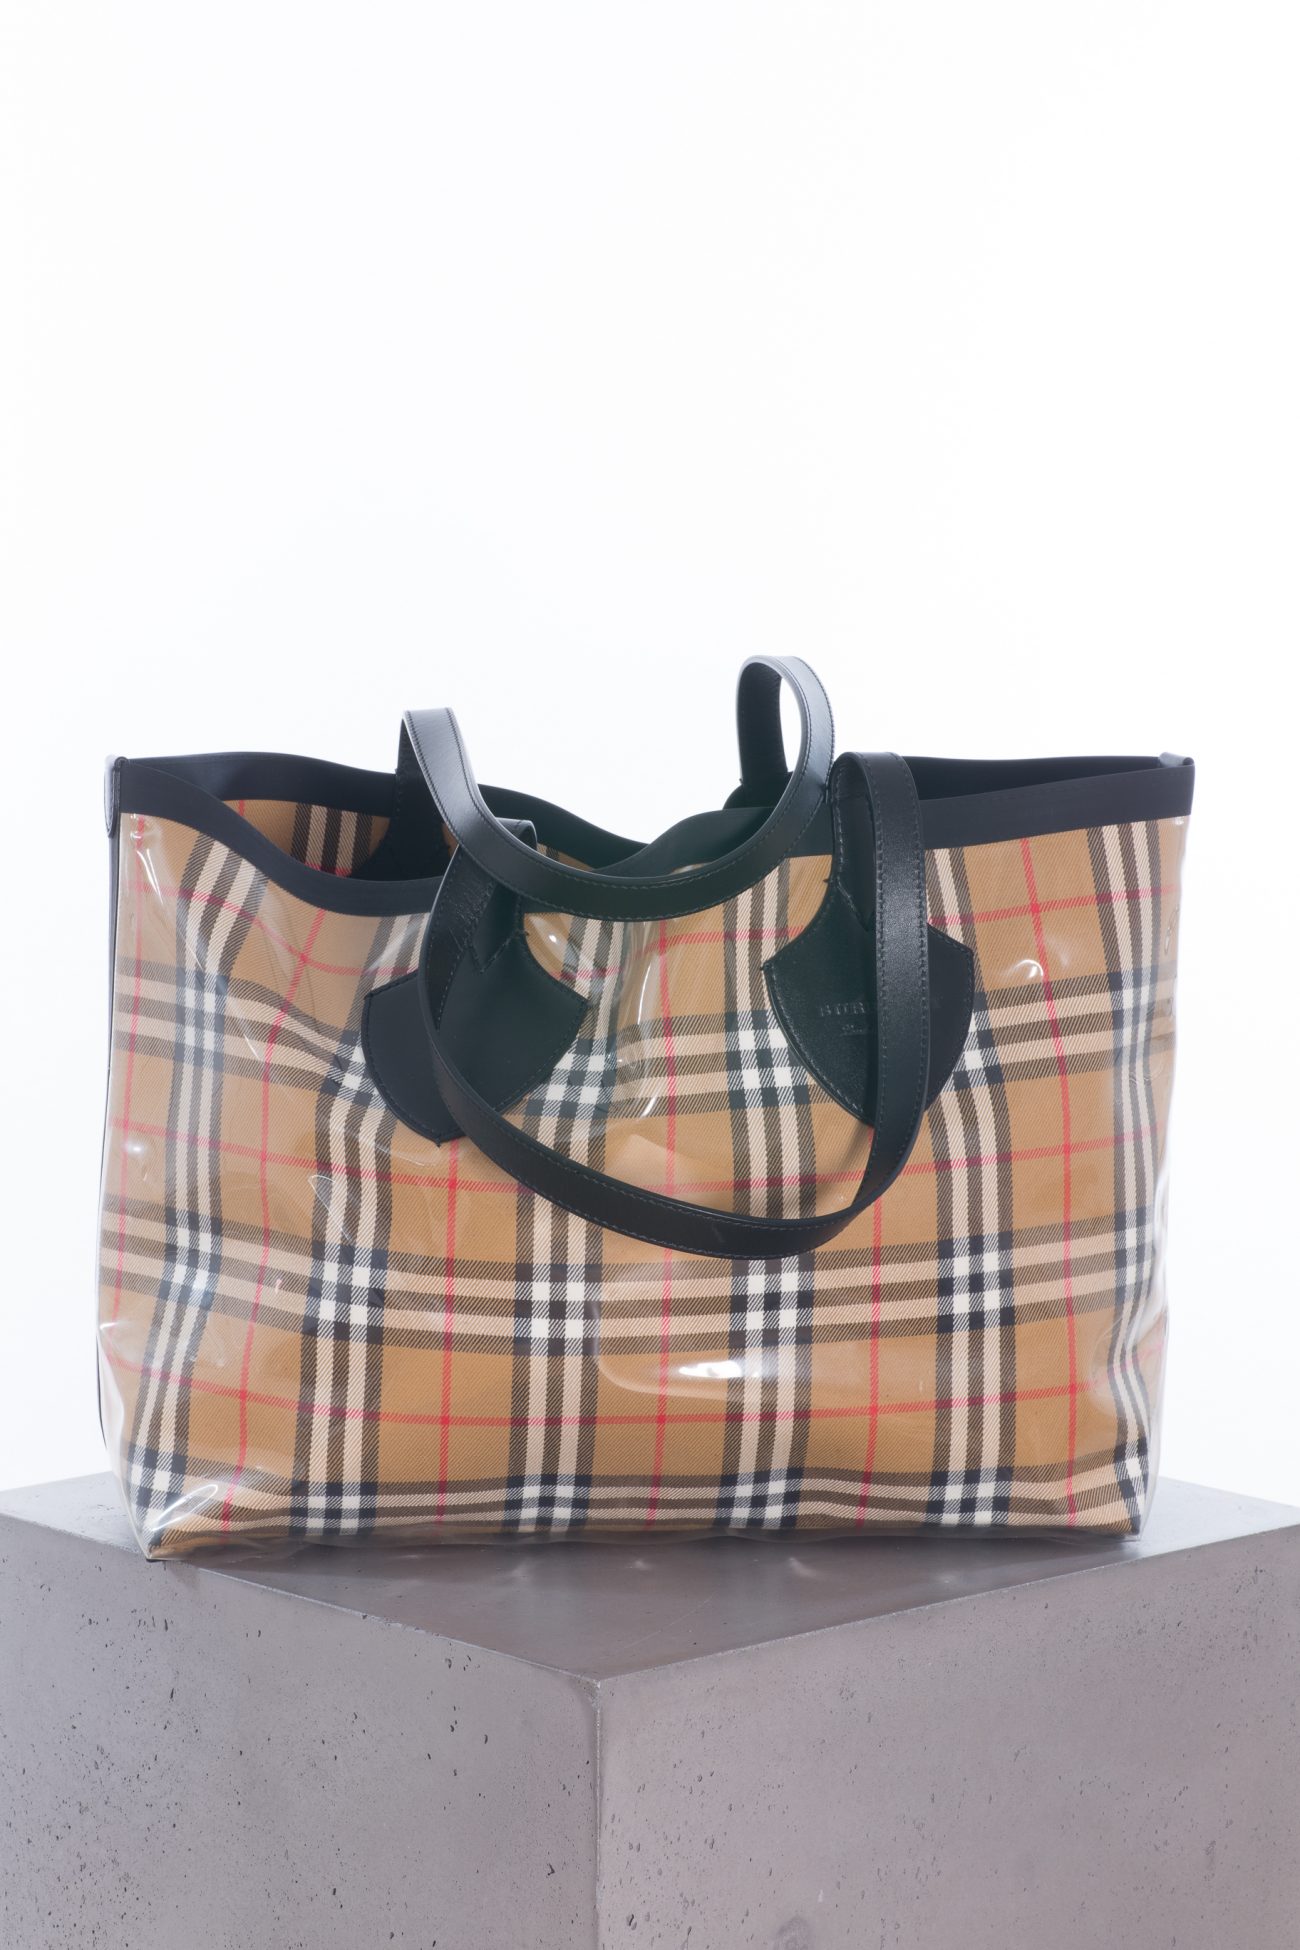 Burberry Bag - Huntessa Luxury Online Consignment Boutique